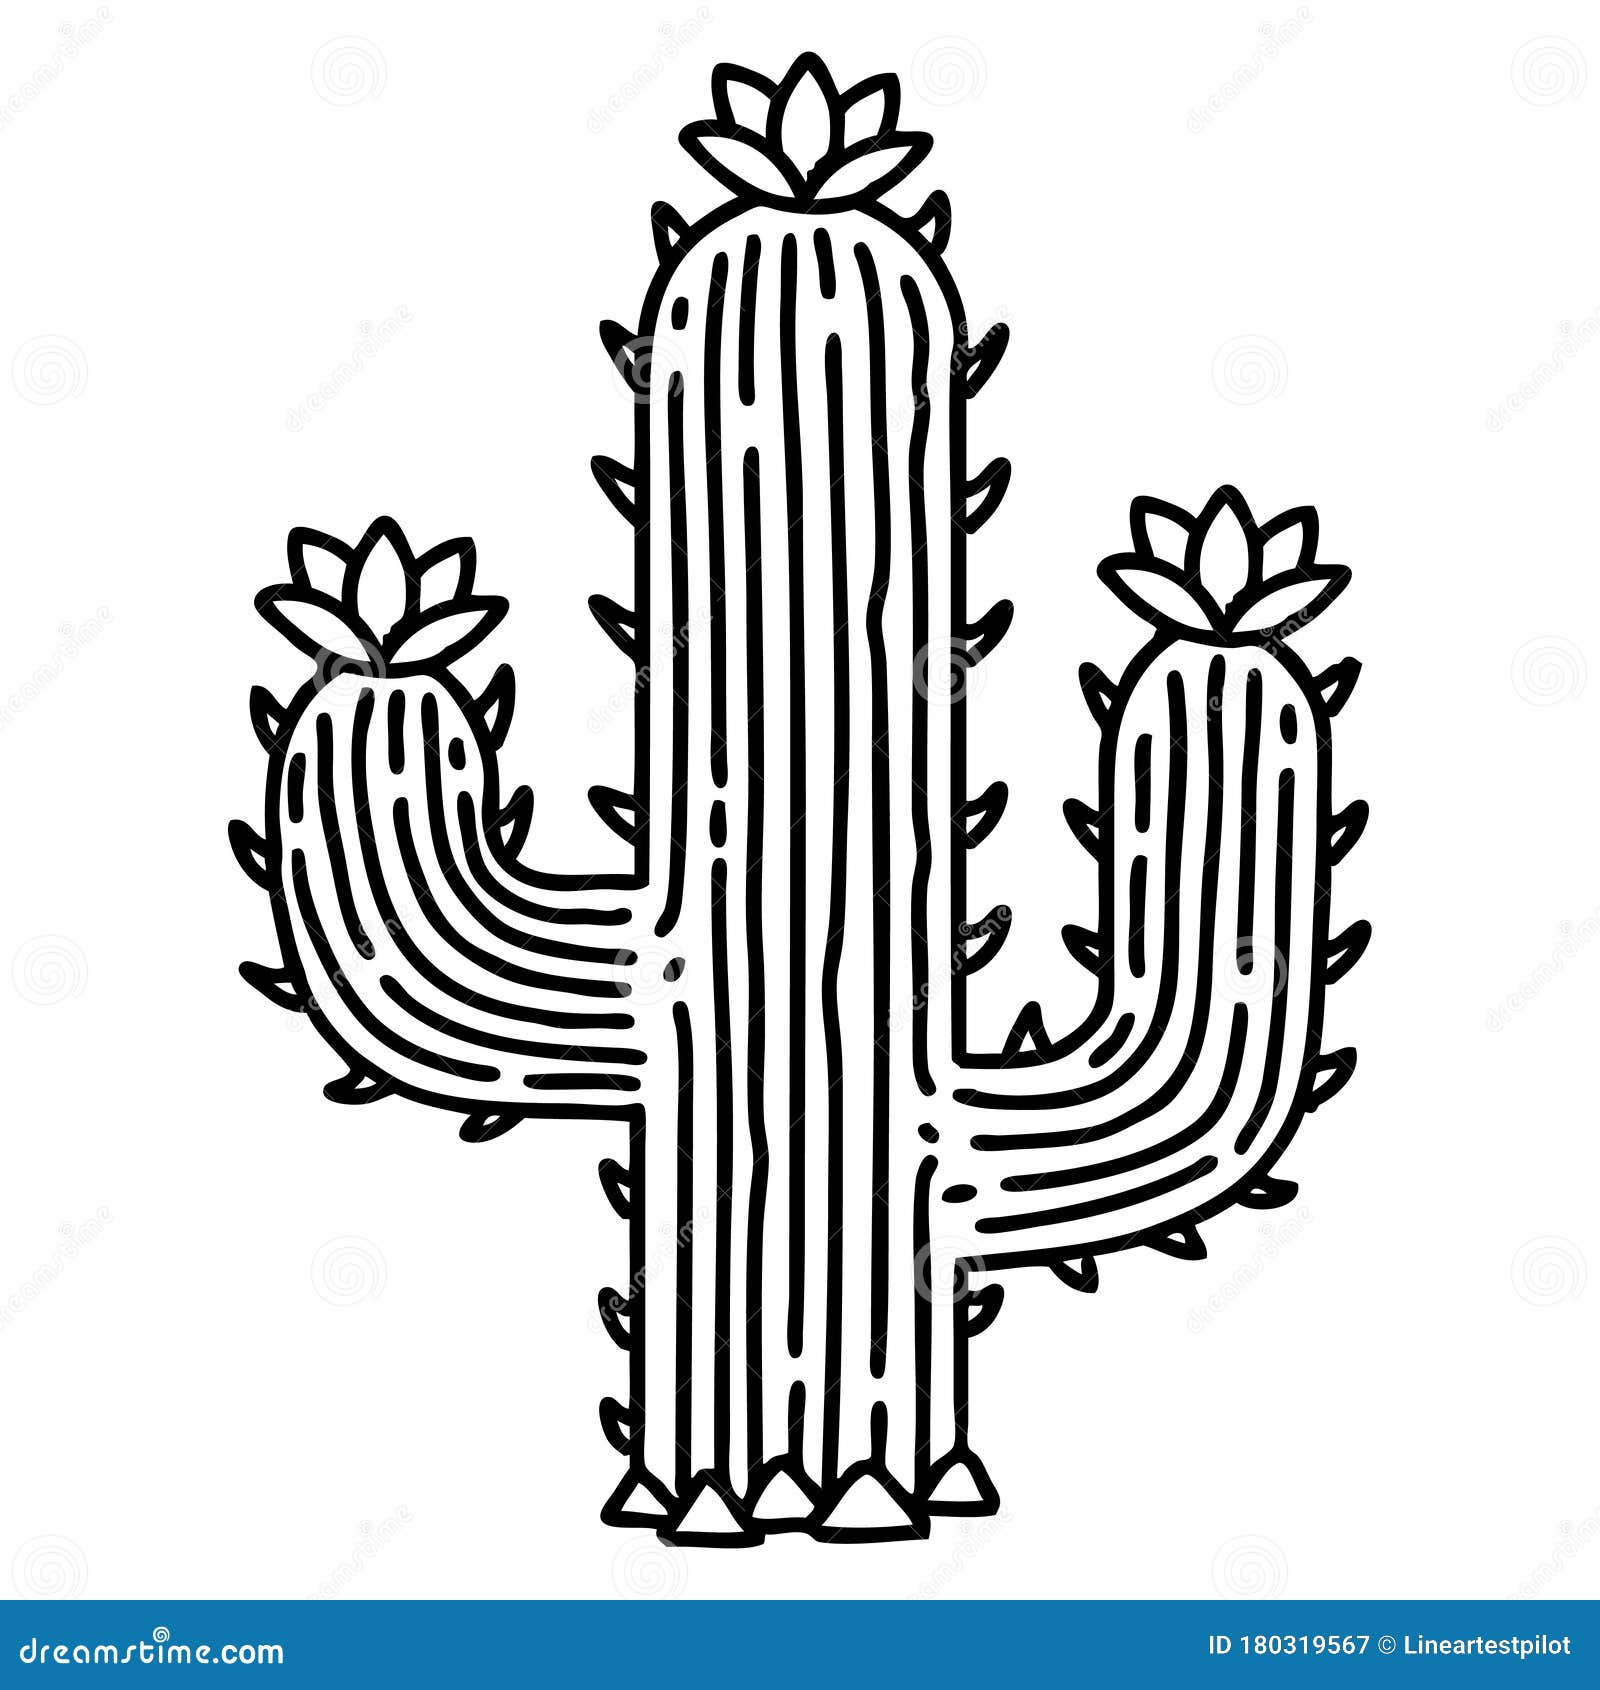 Barrel Cactus Temporary Tattoo  Set of 3  Tatteco